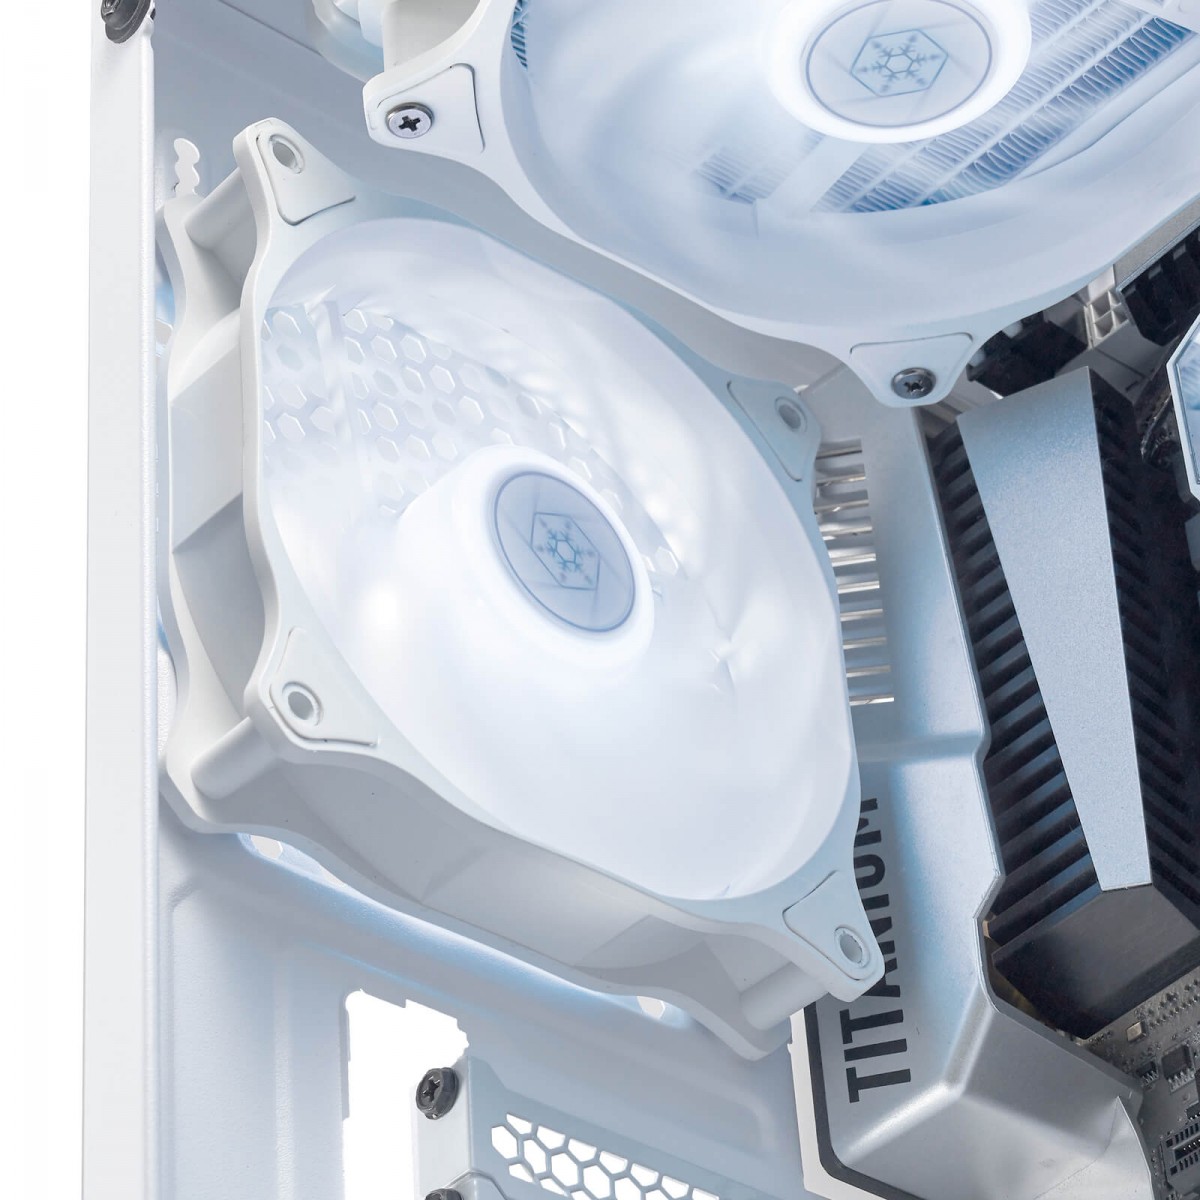 Cooler para Gabinete SilverStone Air Blazer 120RW, ARGB, White, 120mm, SST-AB120RW-ARGB